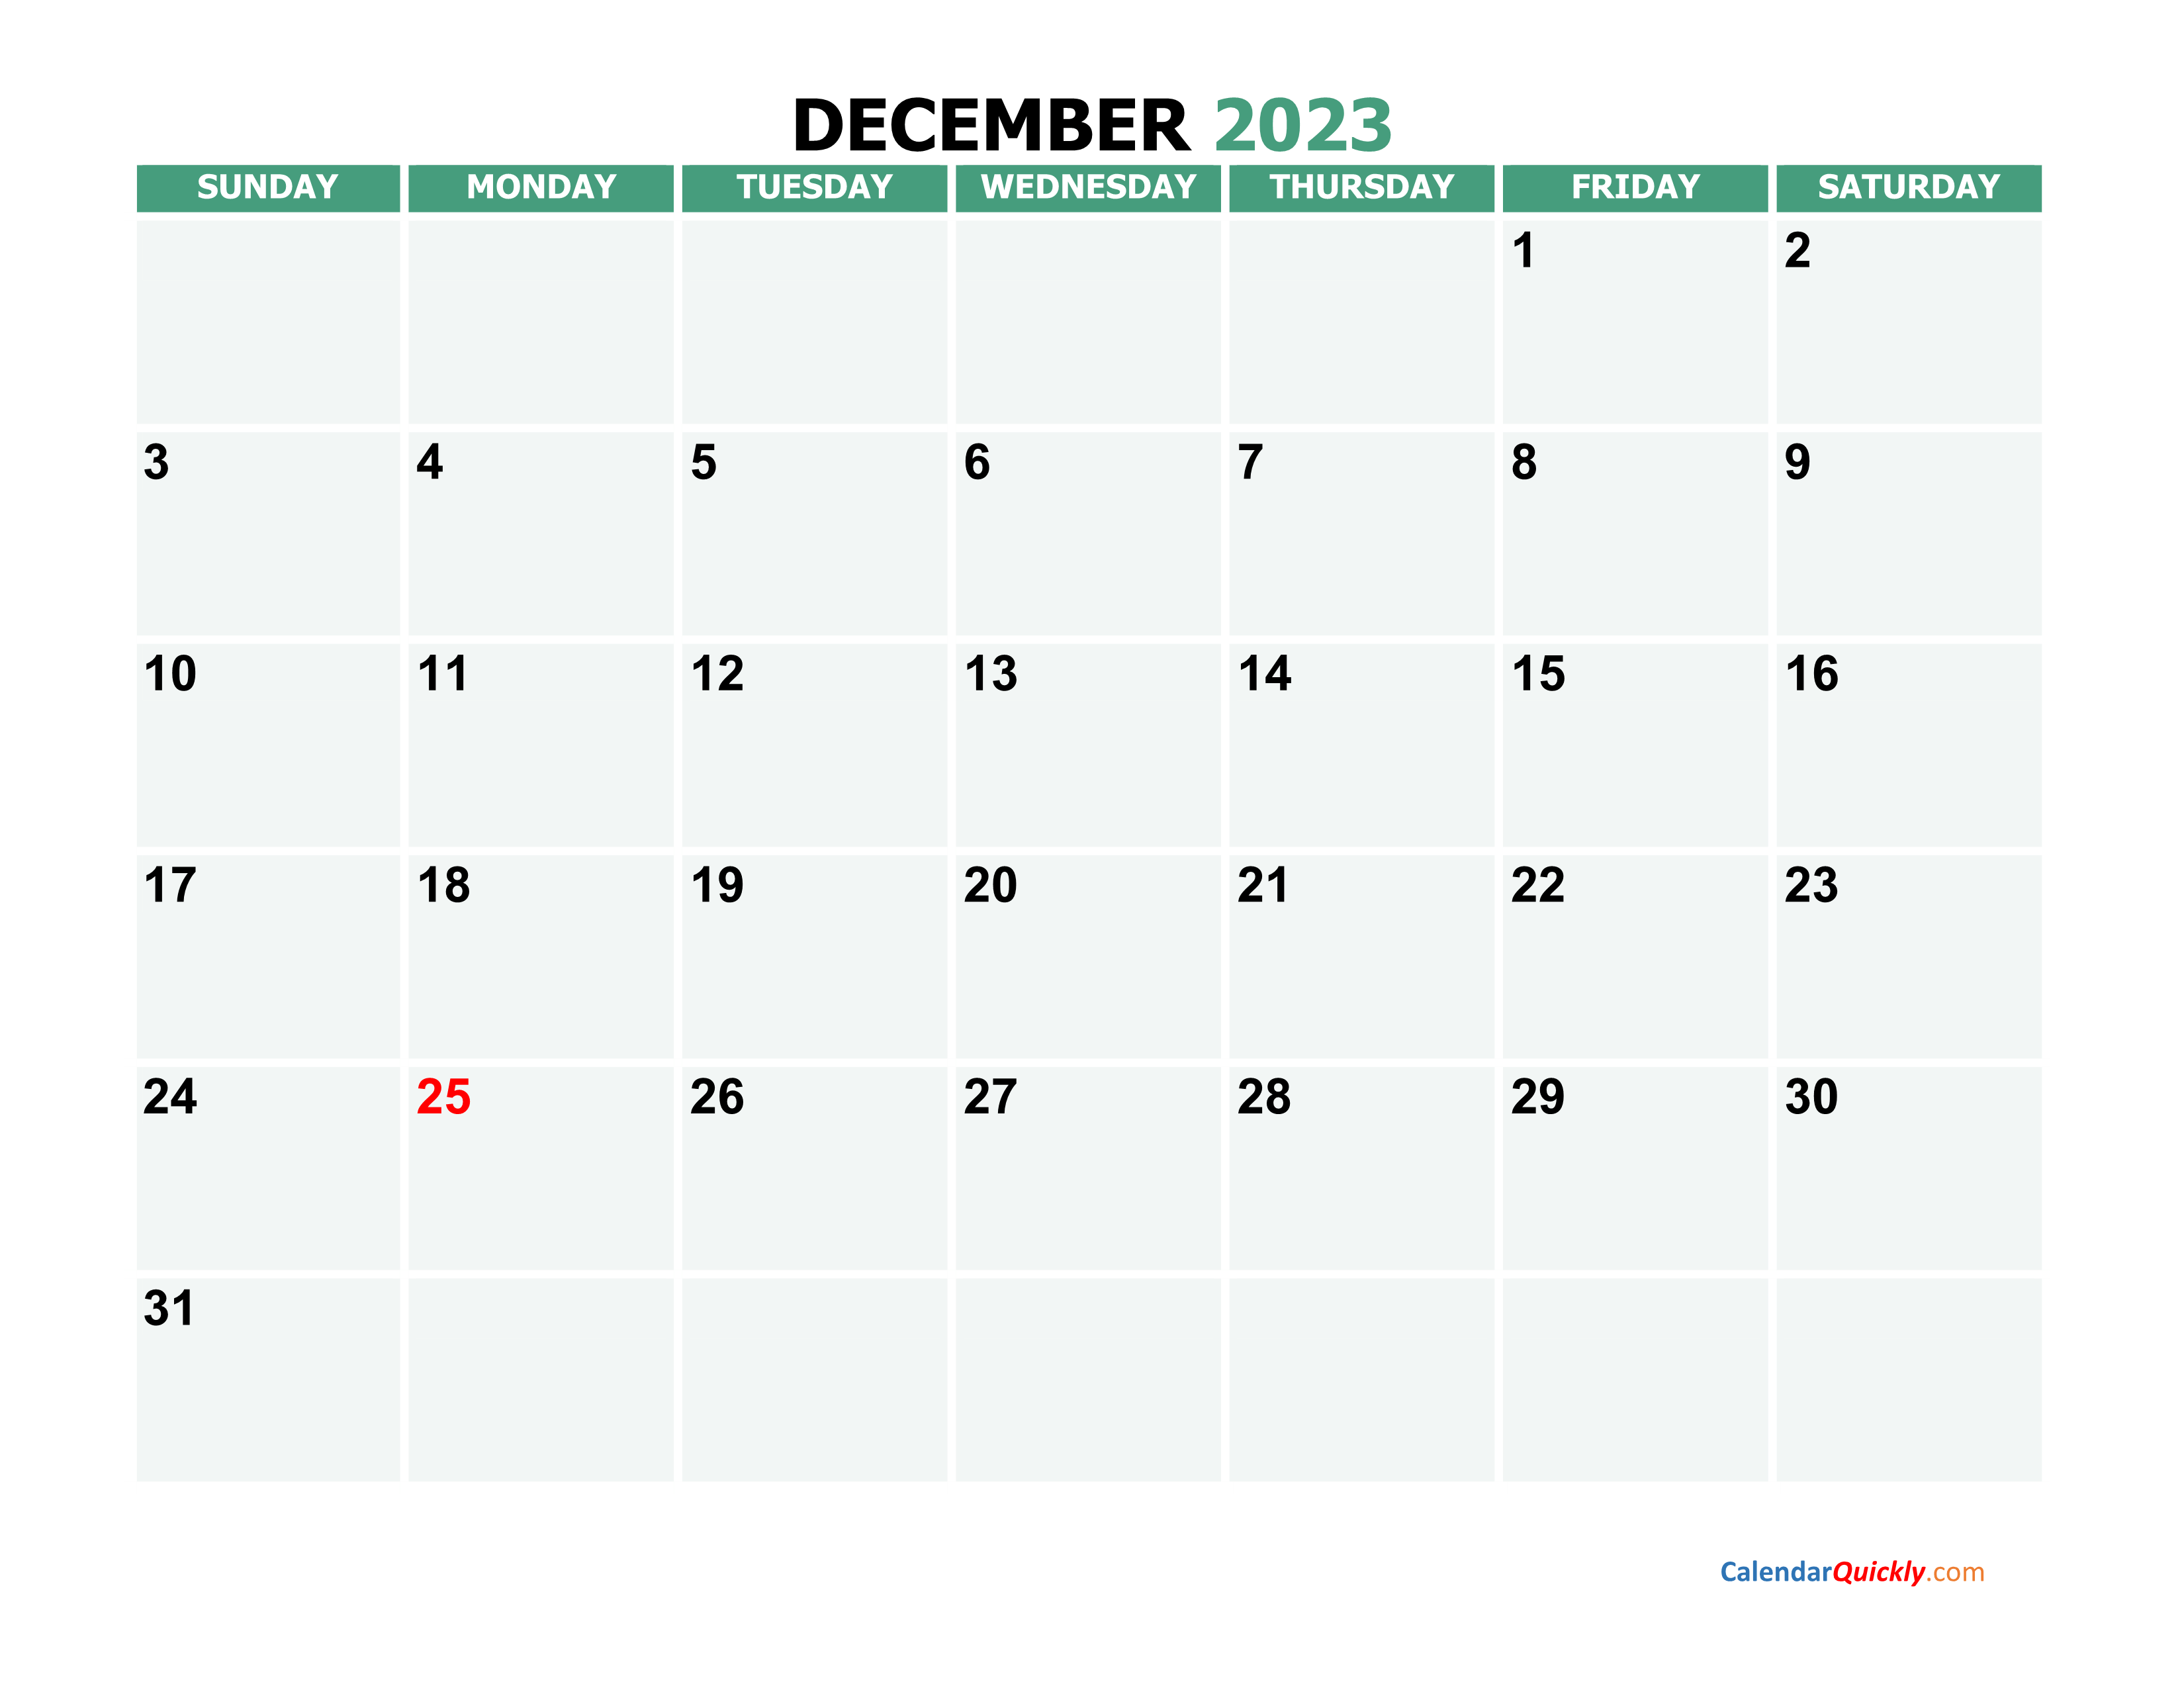 December 2023 Calendars | Calendar Quickly